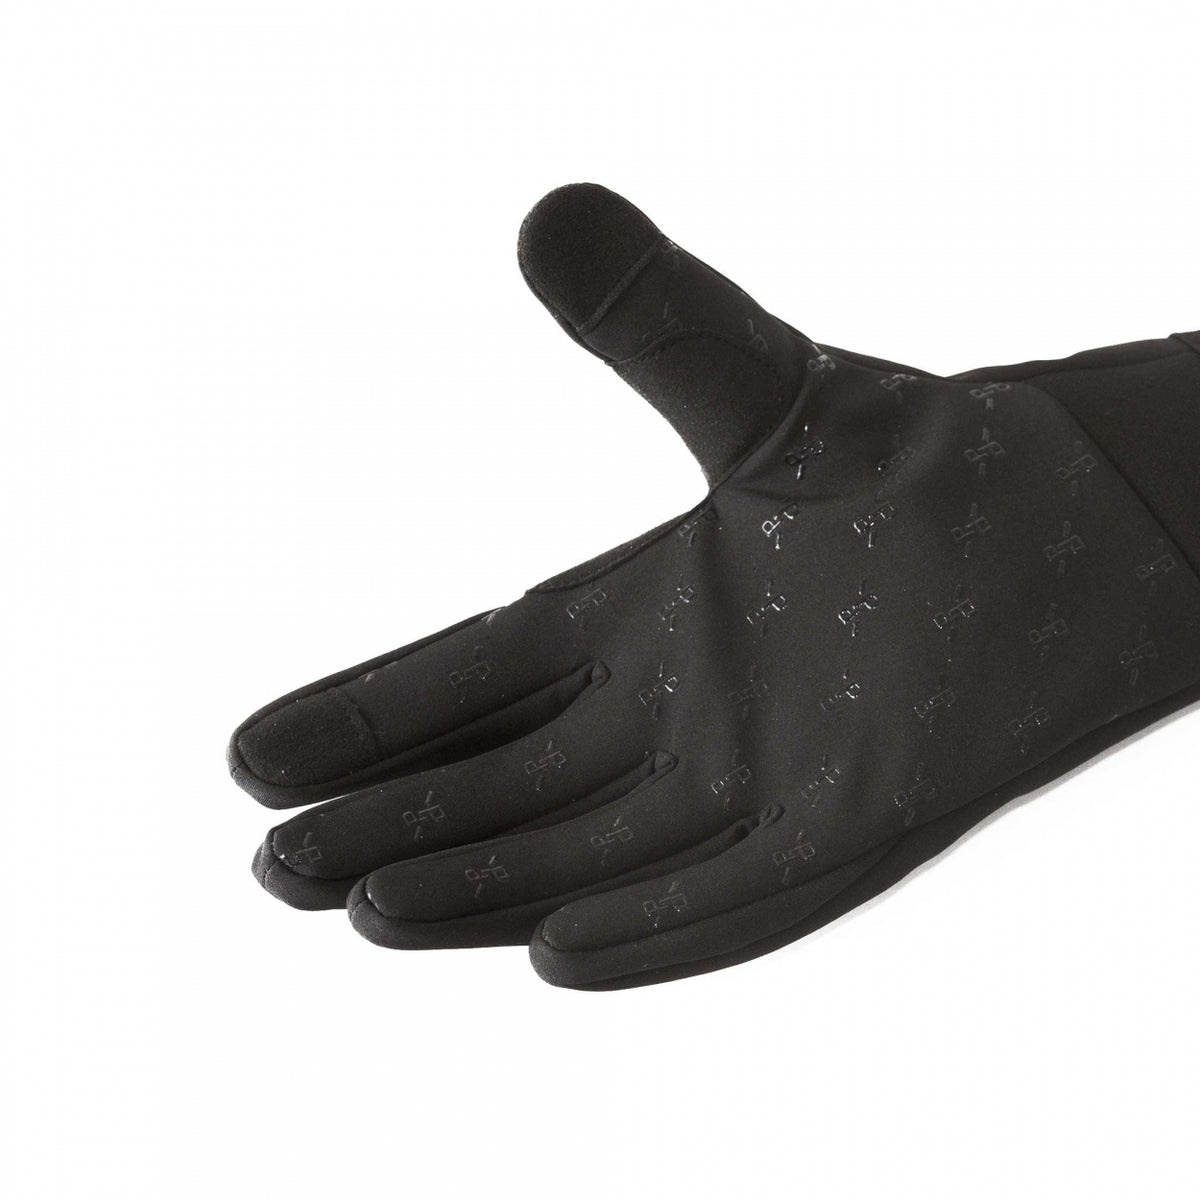 Winter Gloves | Black